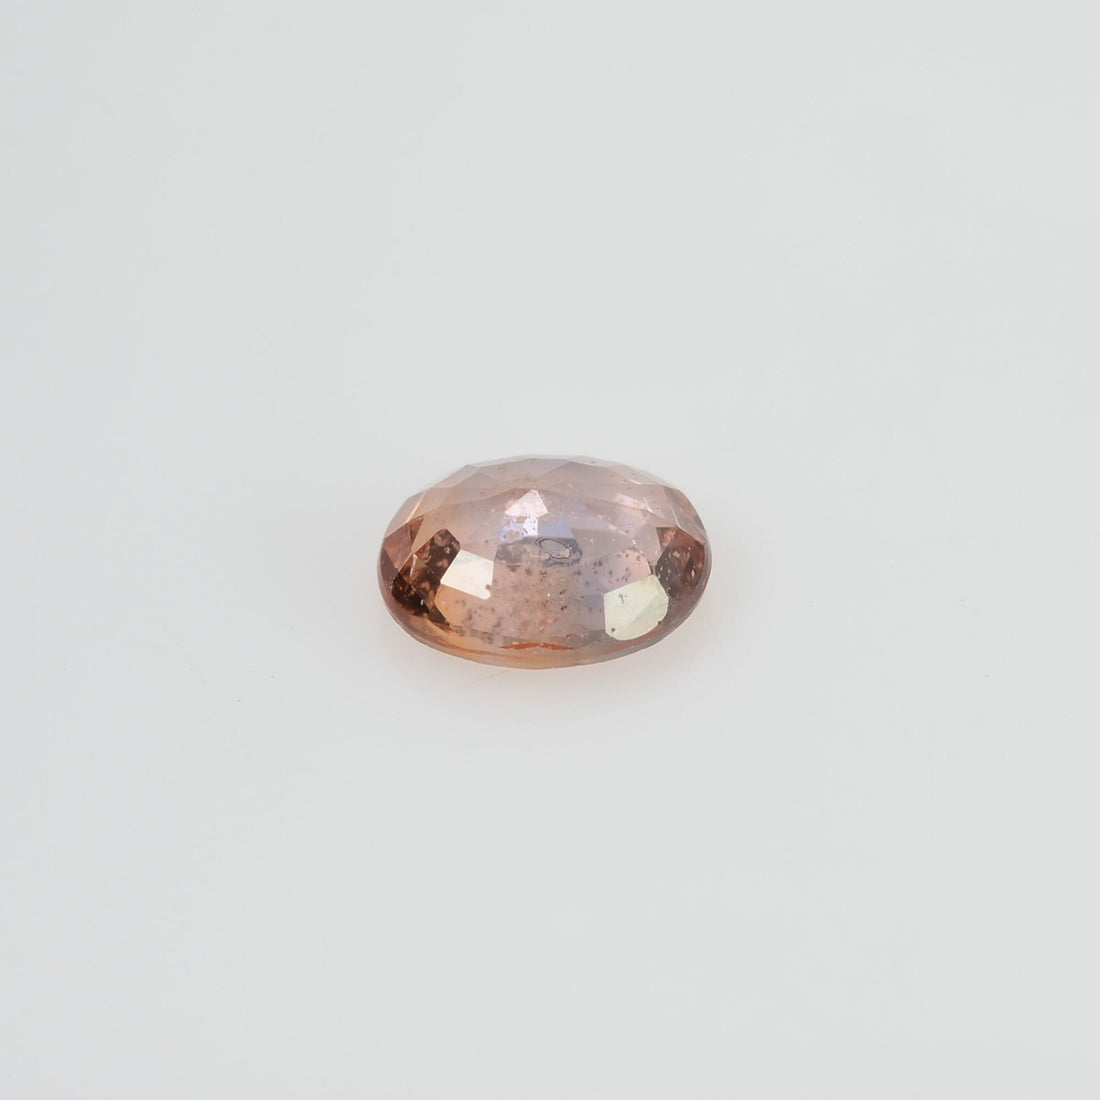 0.64 cts Natural Peach Sapphire Loose Gemstone Oval Cut